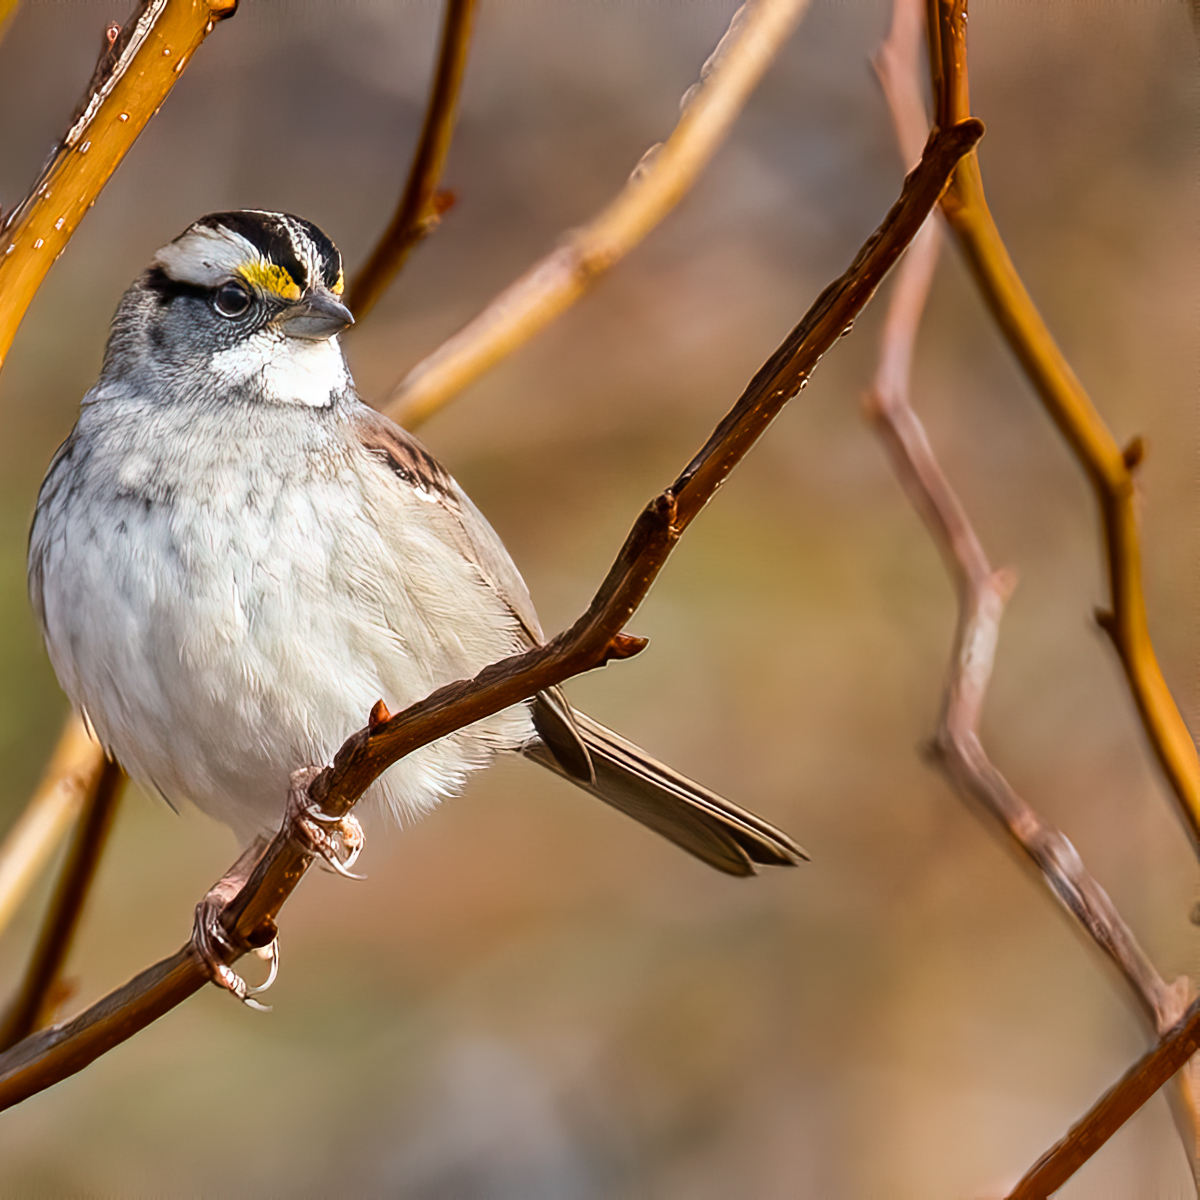 White throated sparrow, North Carolina